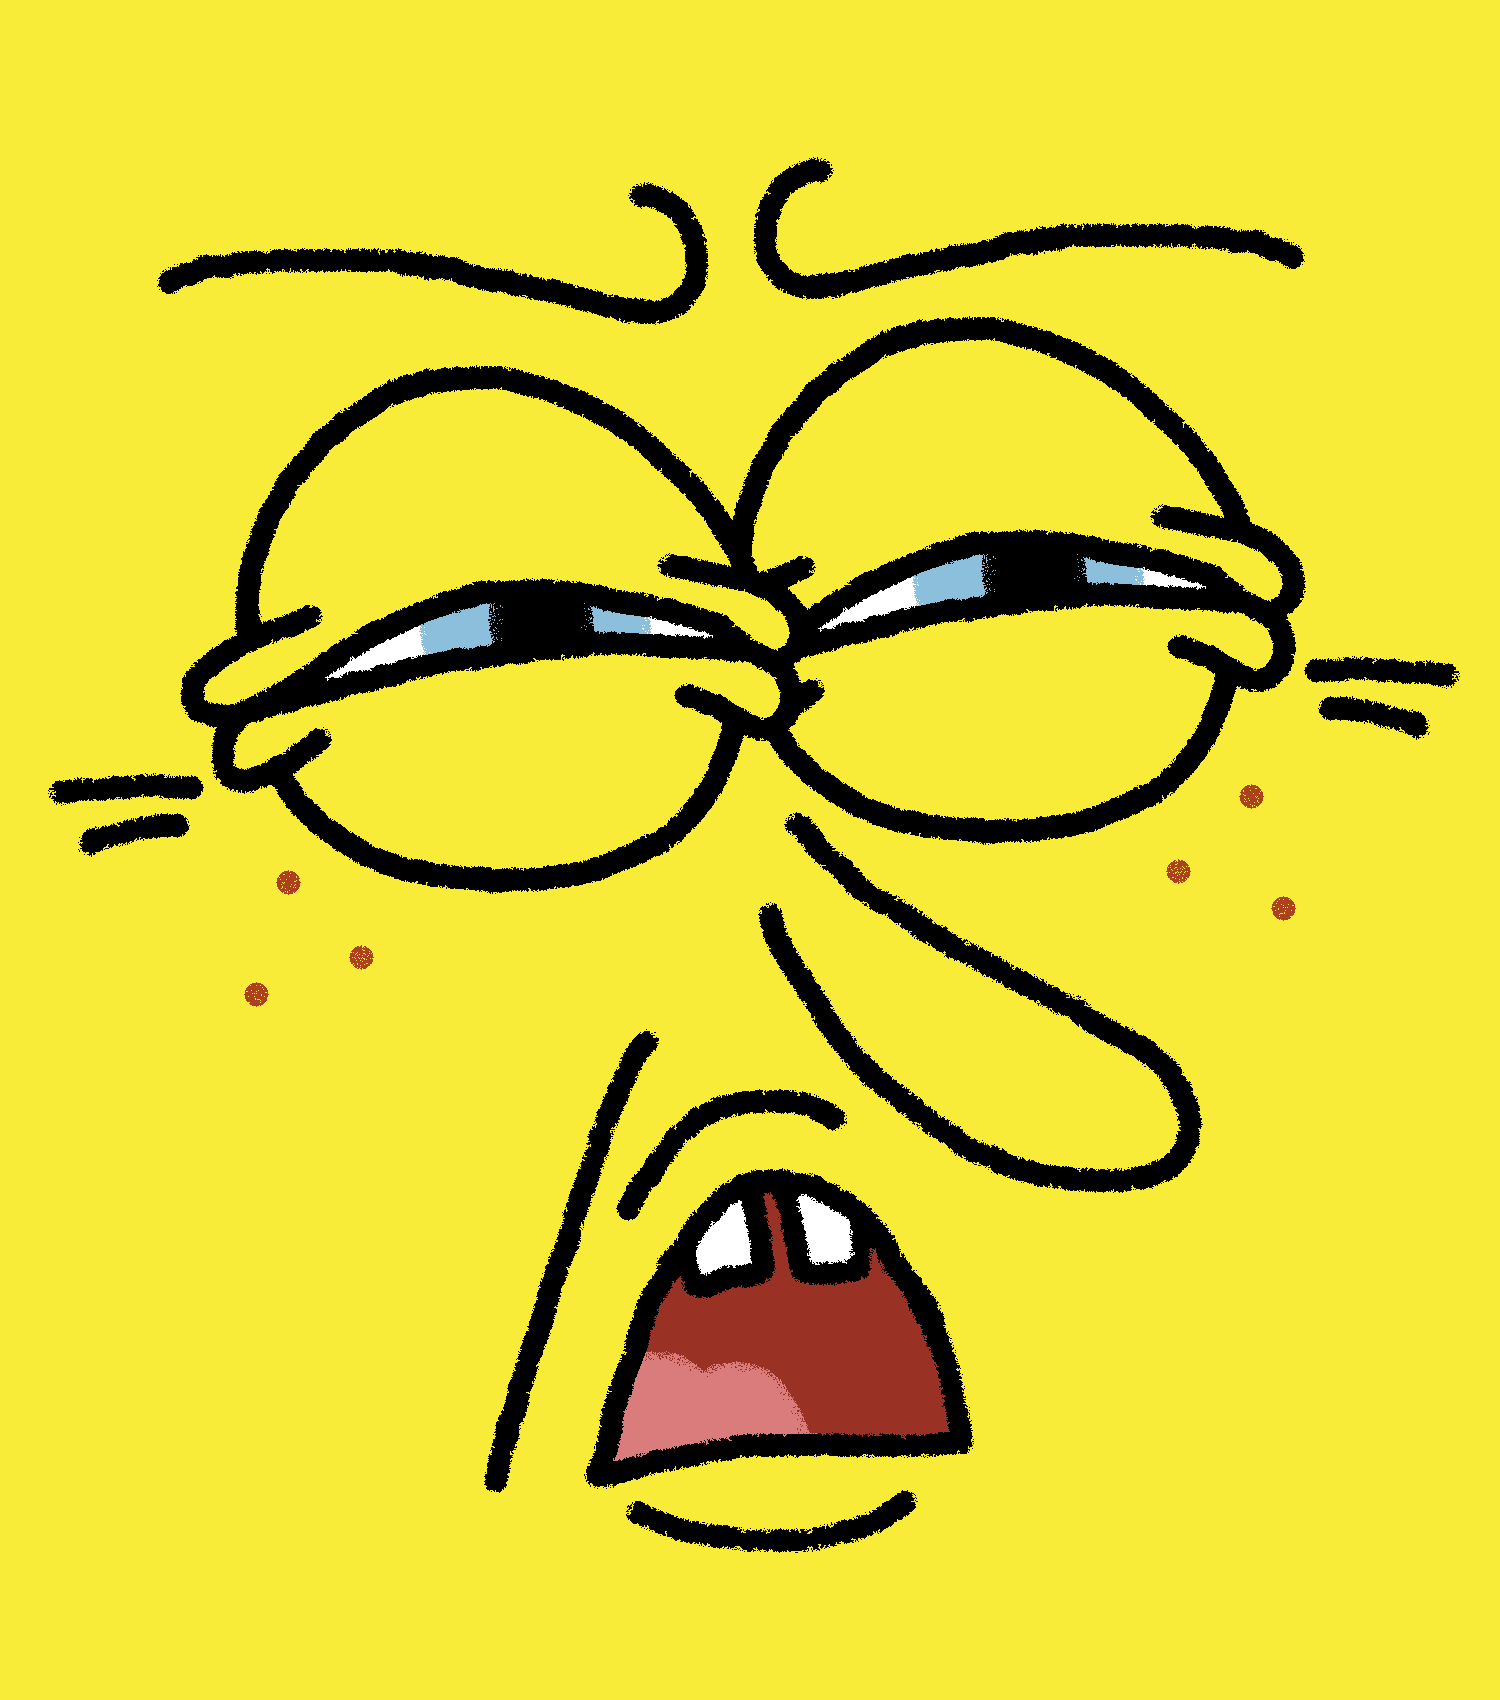 Seeing SpongeBob sad makes me wanna cry. :'( - Meme by